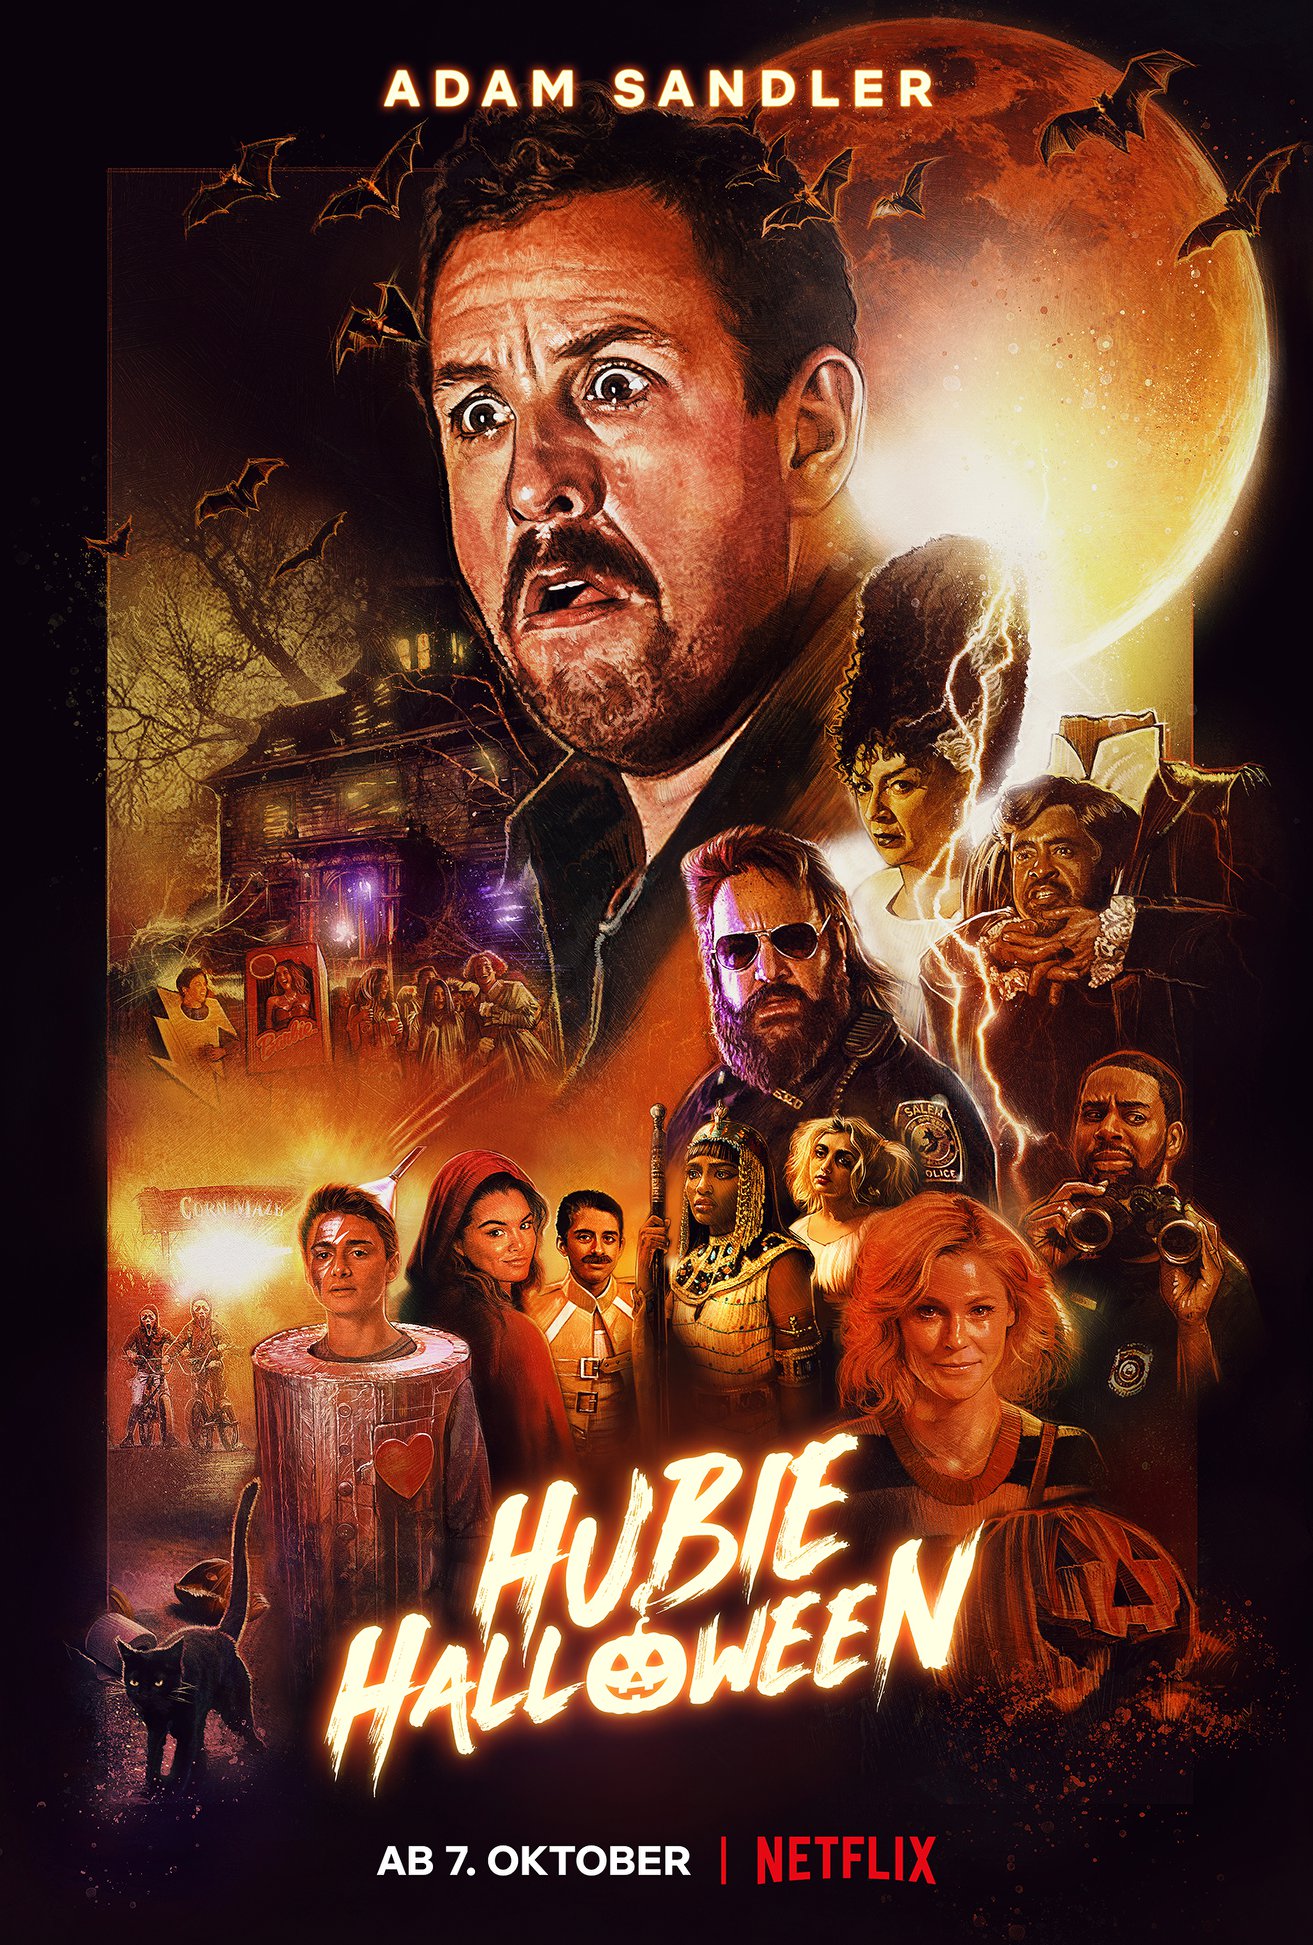 Hubie Halloween Film 2020 Trailer Kritik Kino De